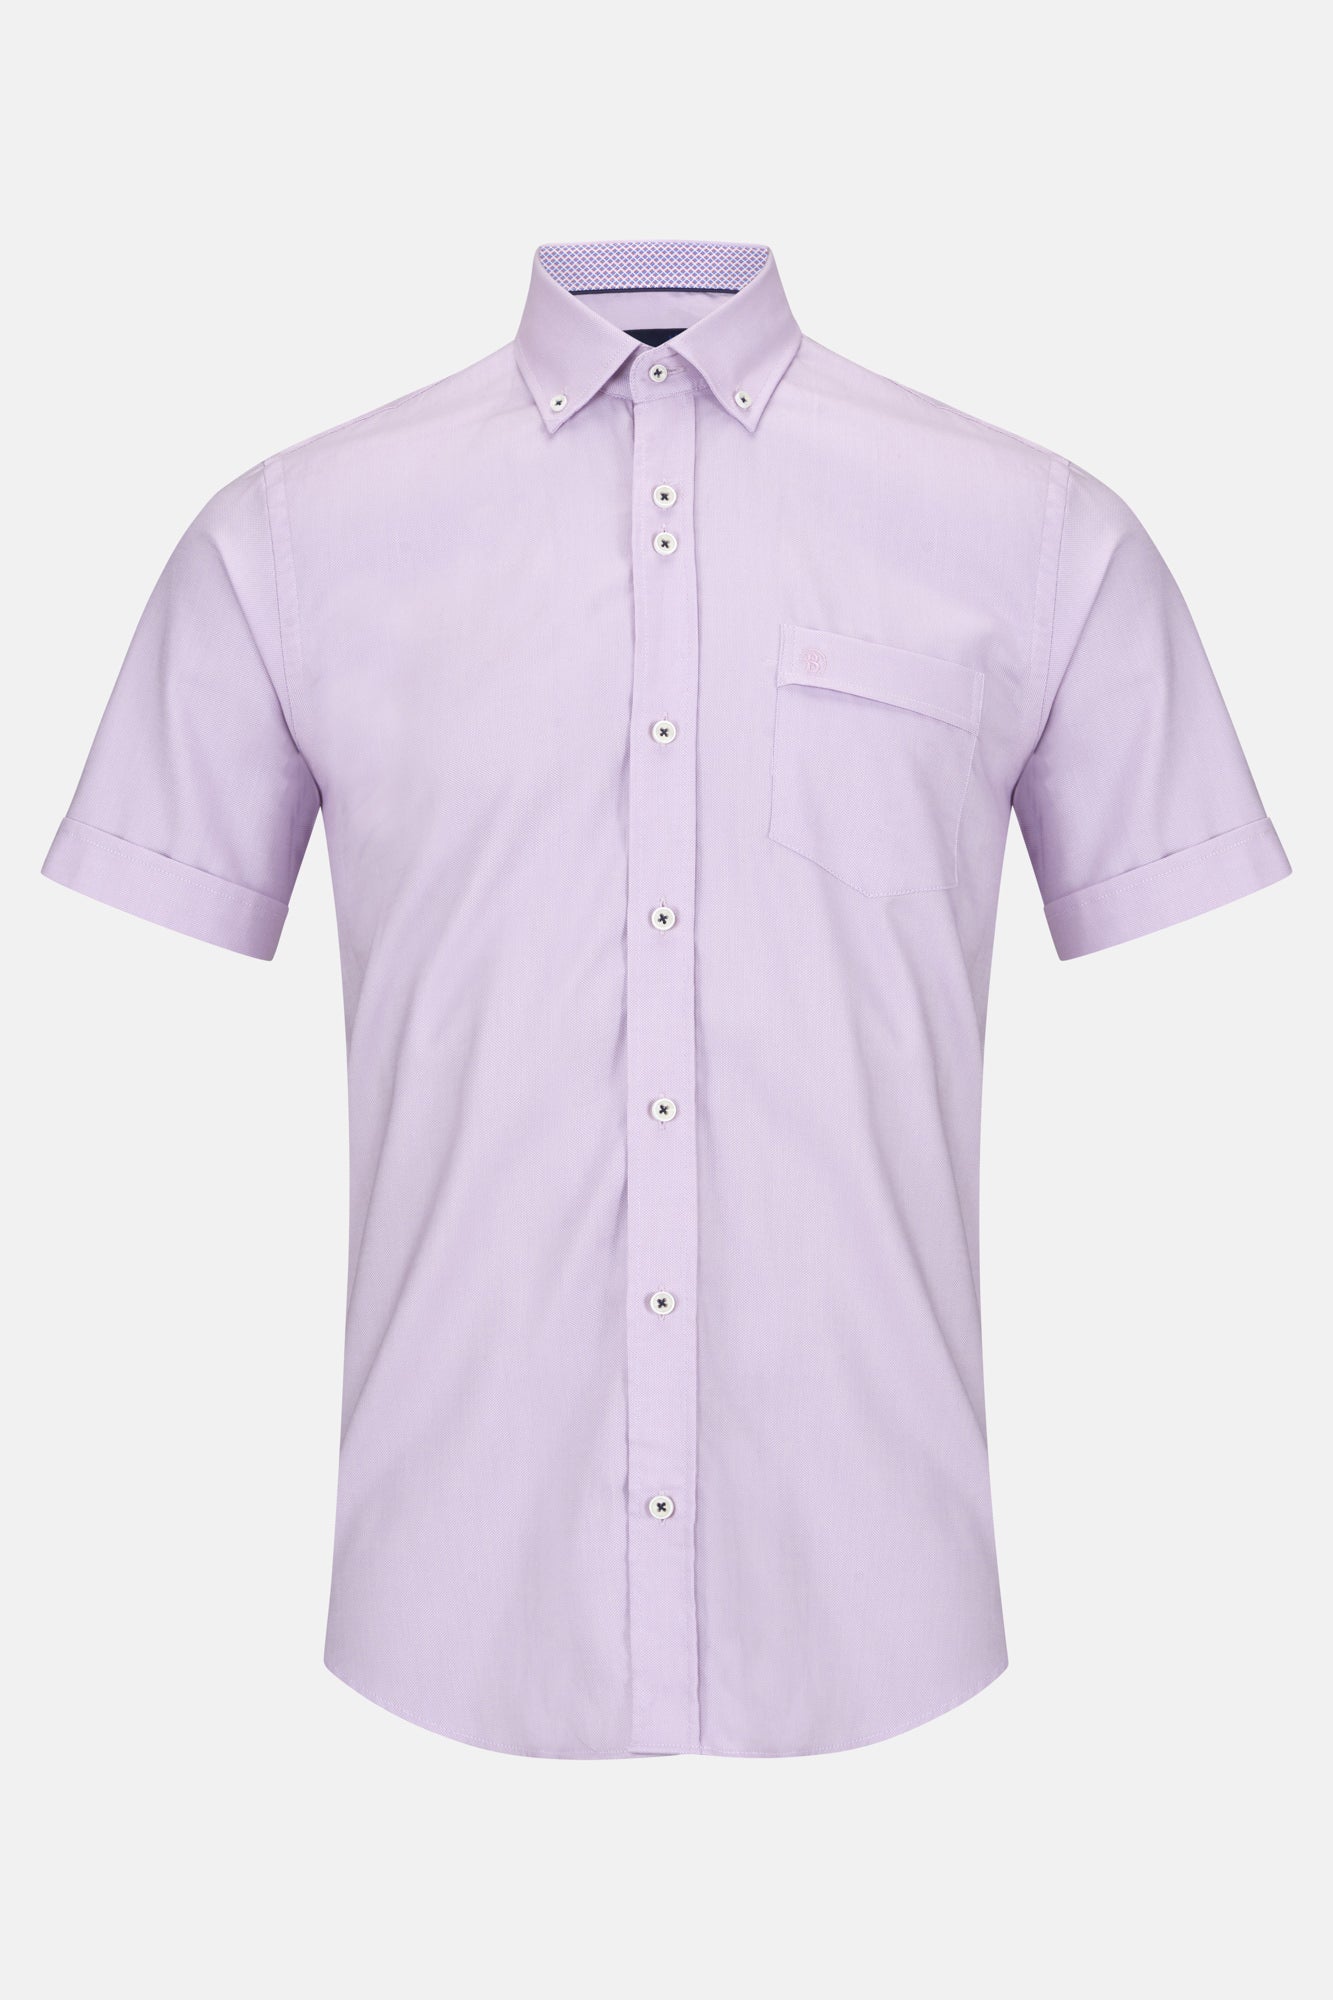 Noah Pink Short Sleeve Shirt By Benetti Menswear 